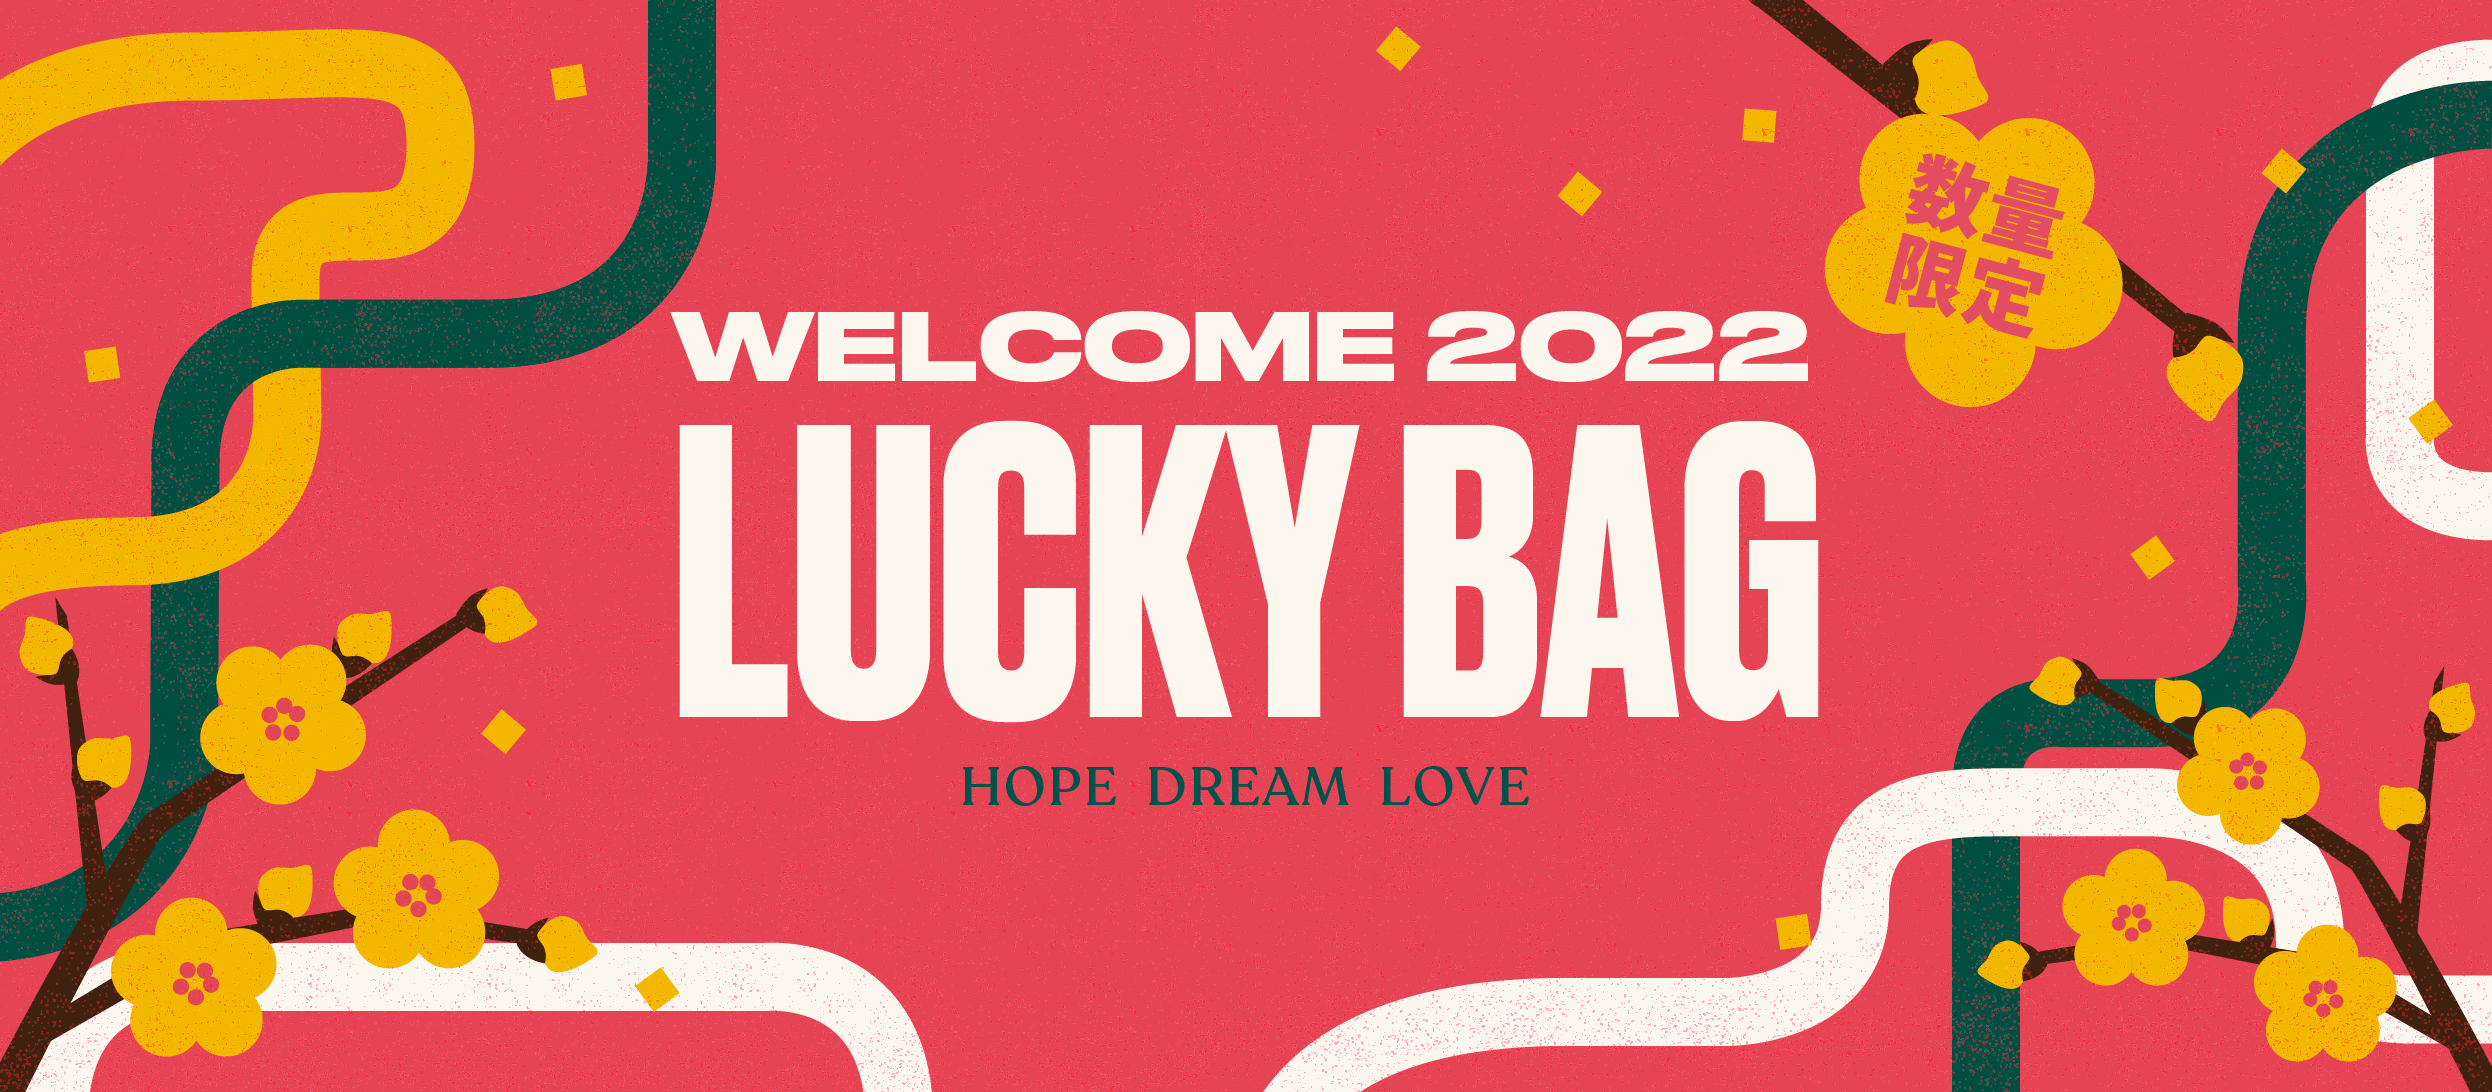 WELCOME 2022 LUCKEY BAG